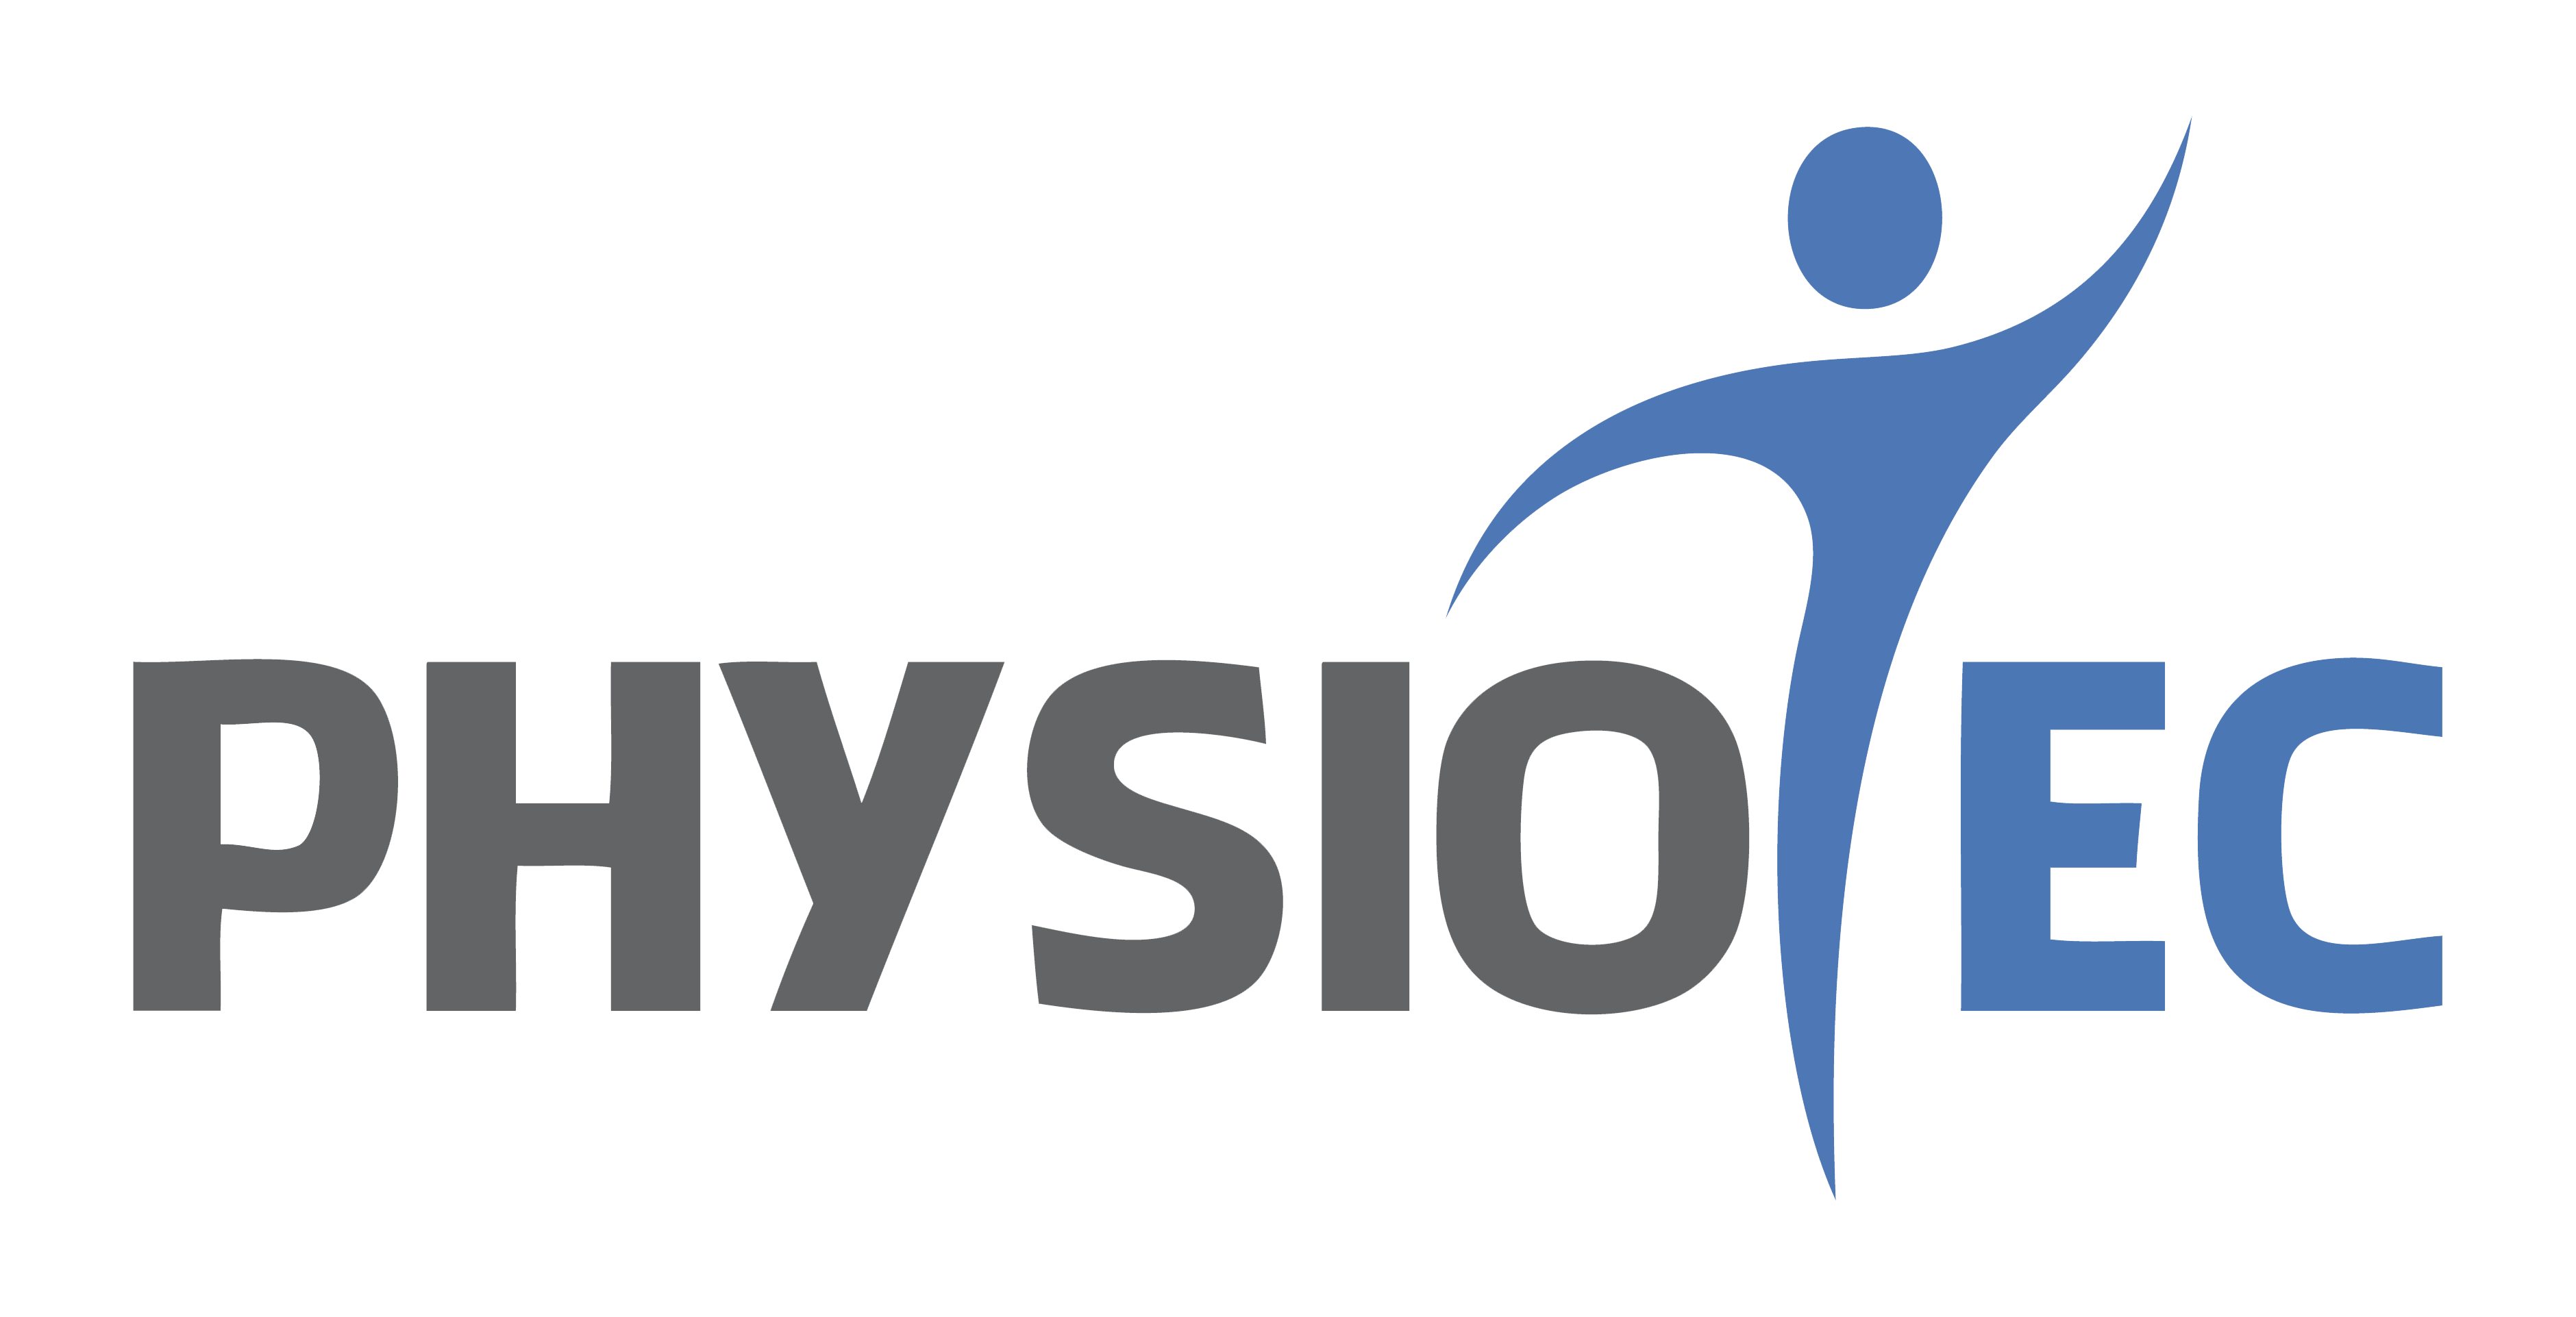 Physiotec logo